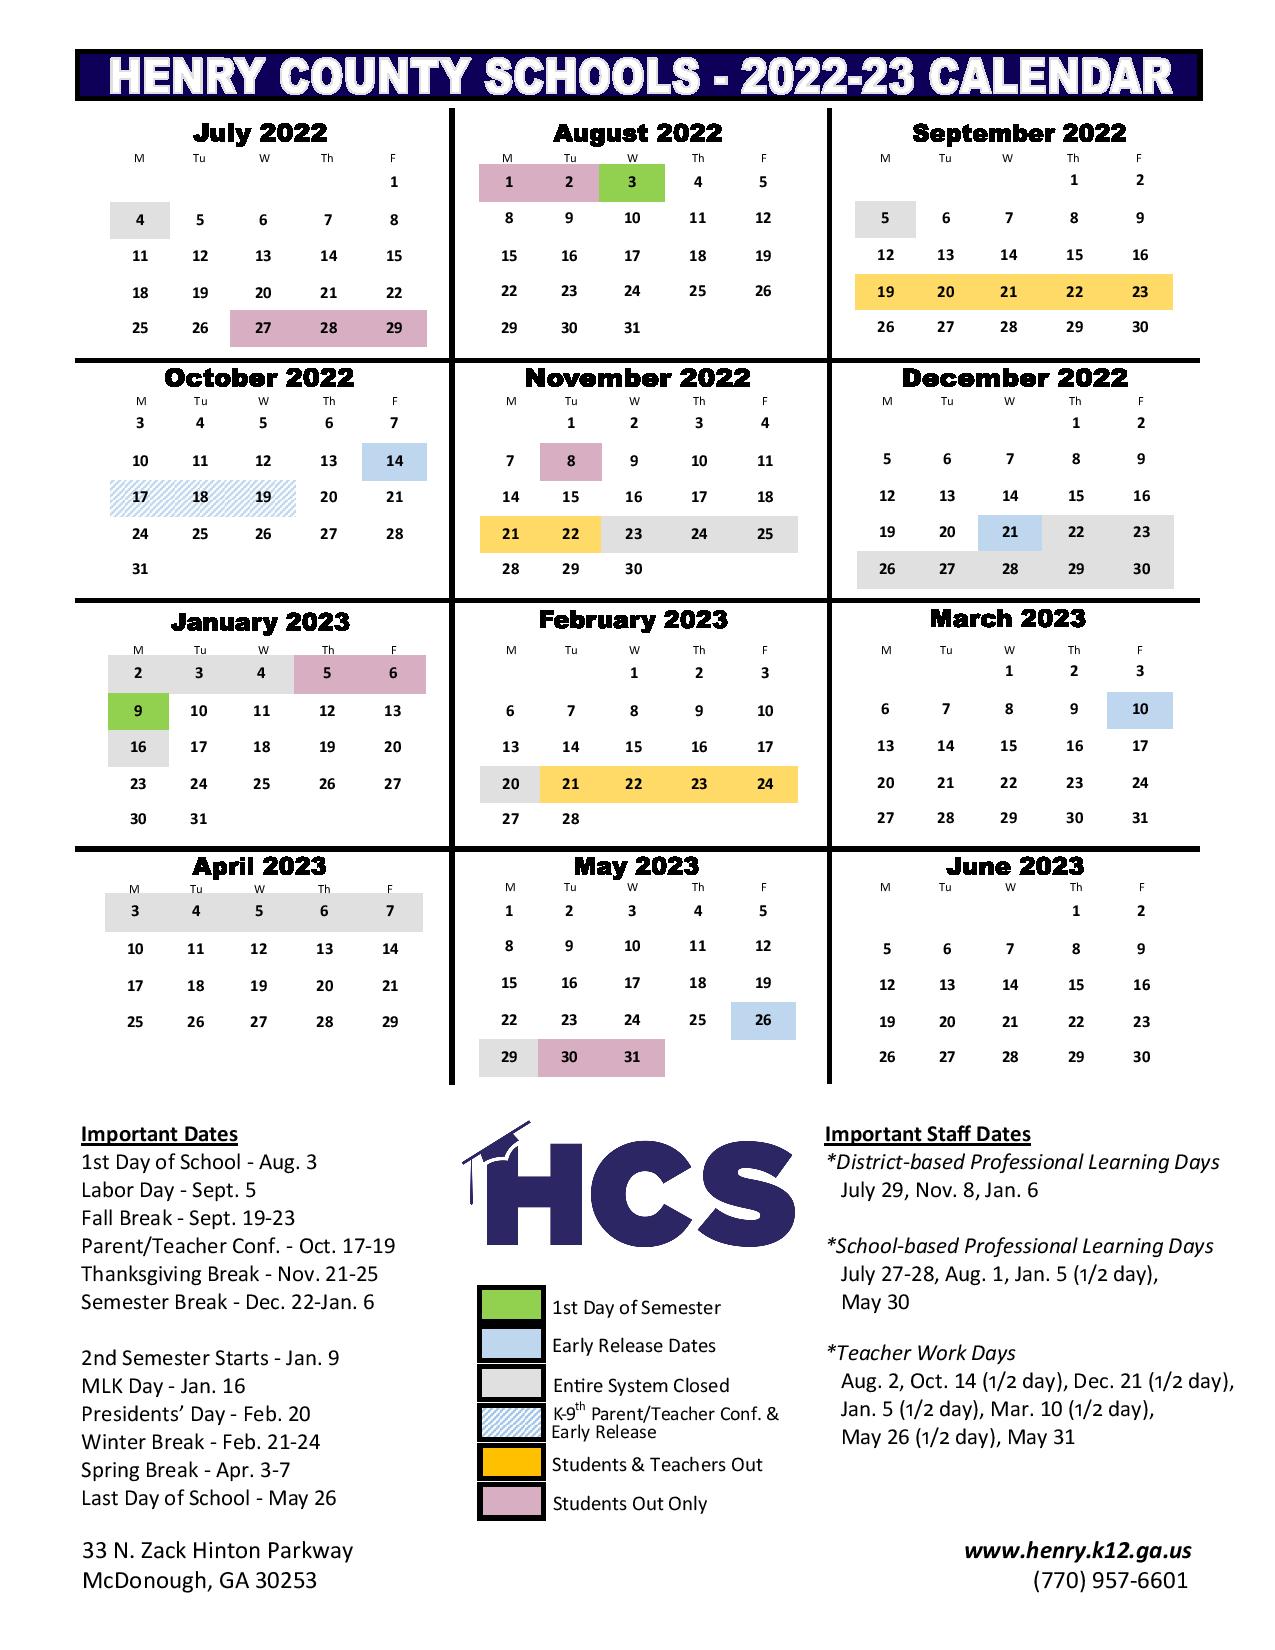 Henry County Schools Calendar 2022 2023 in PDF